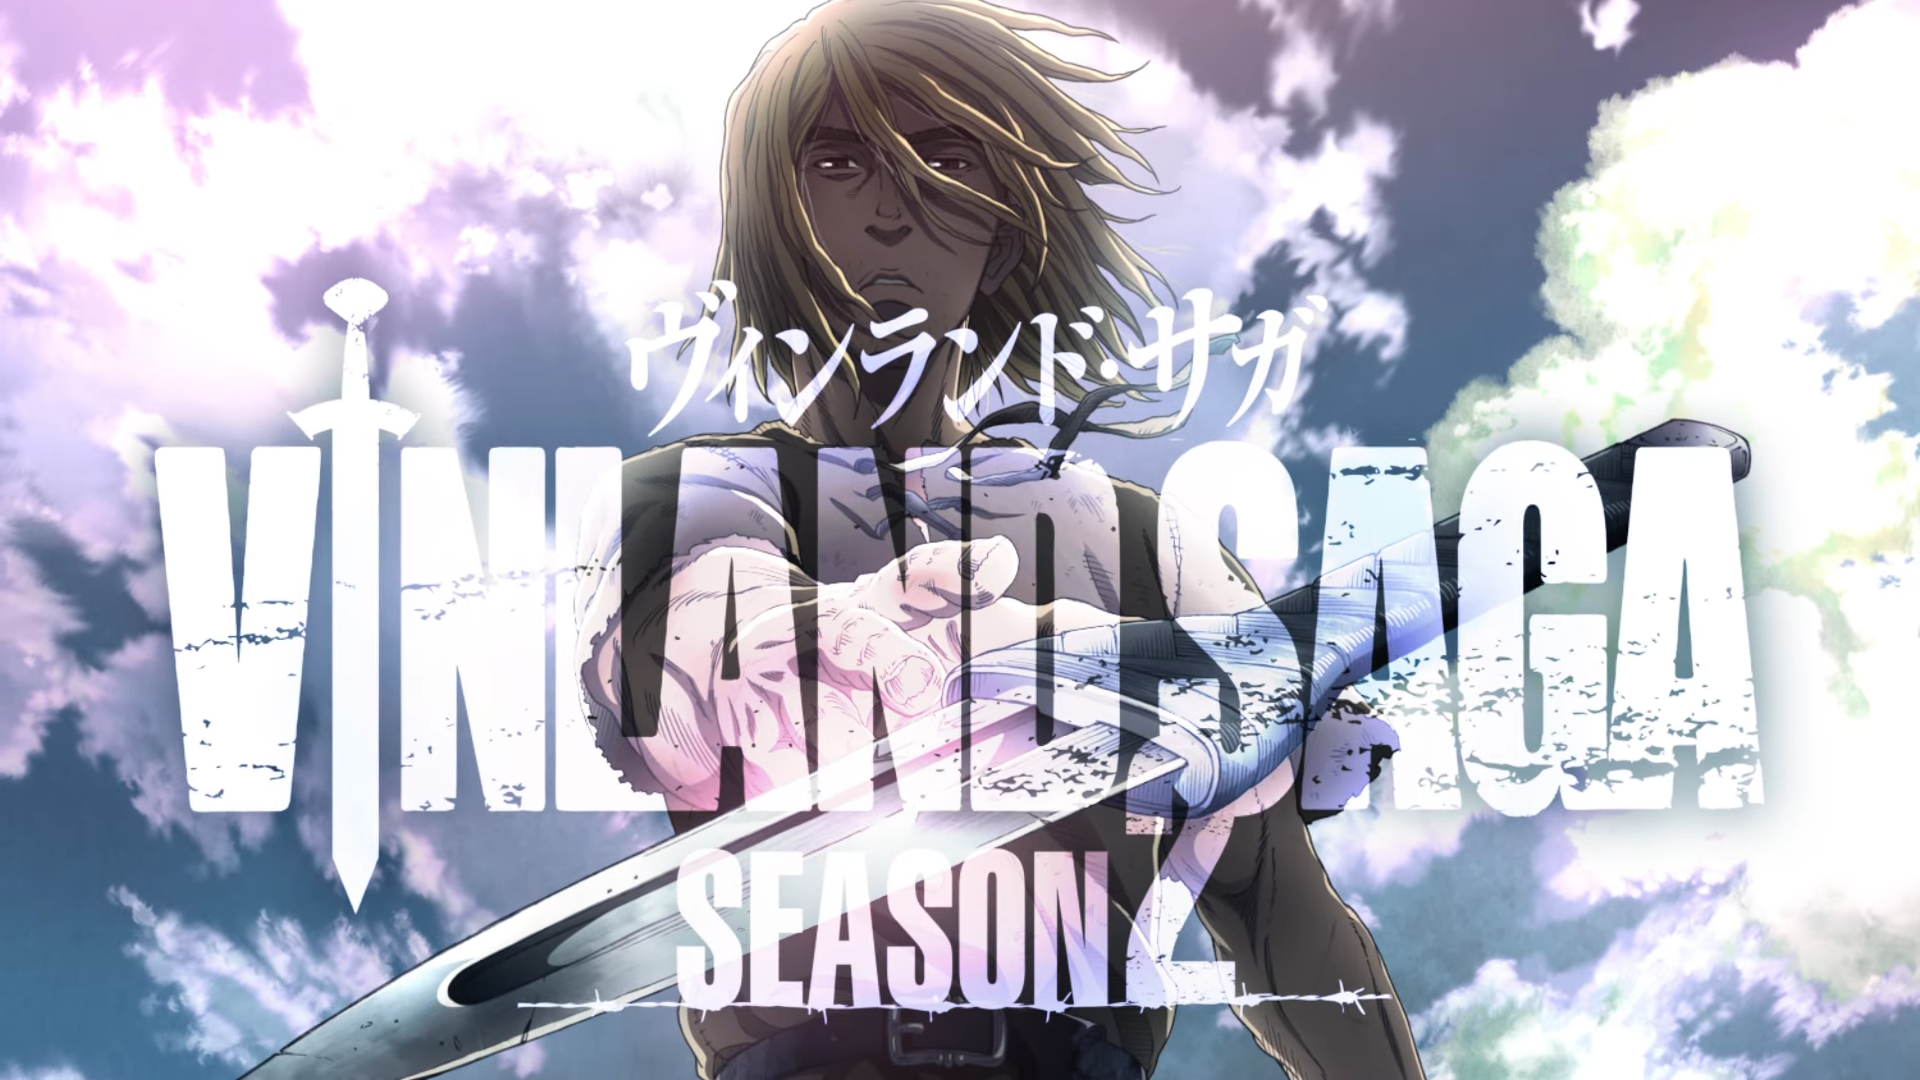 Vinland Saga Season 2: The Director Teases of A New Season - Anime